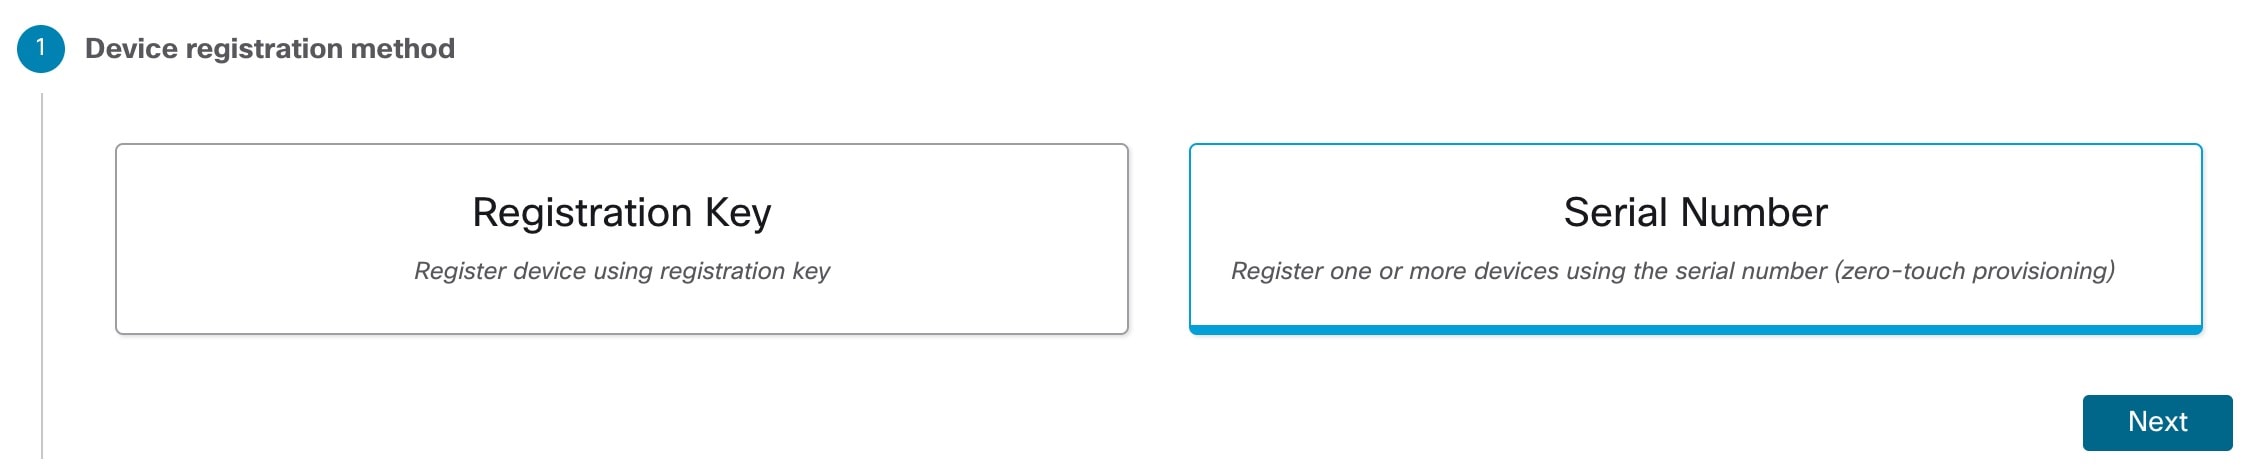 Device Registration Method